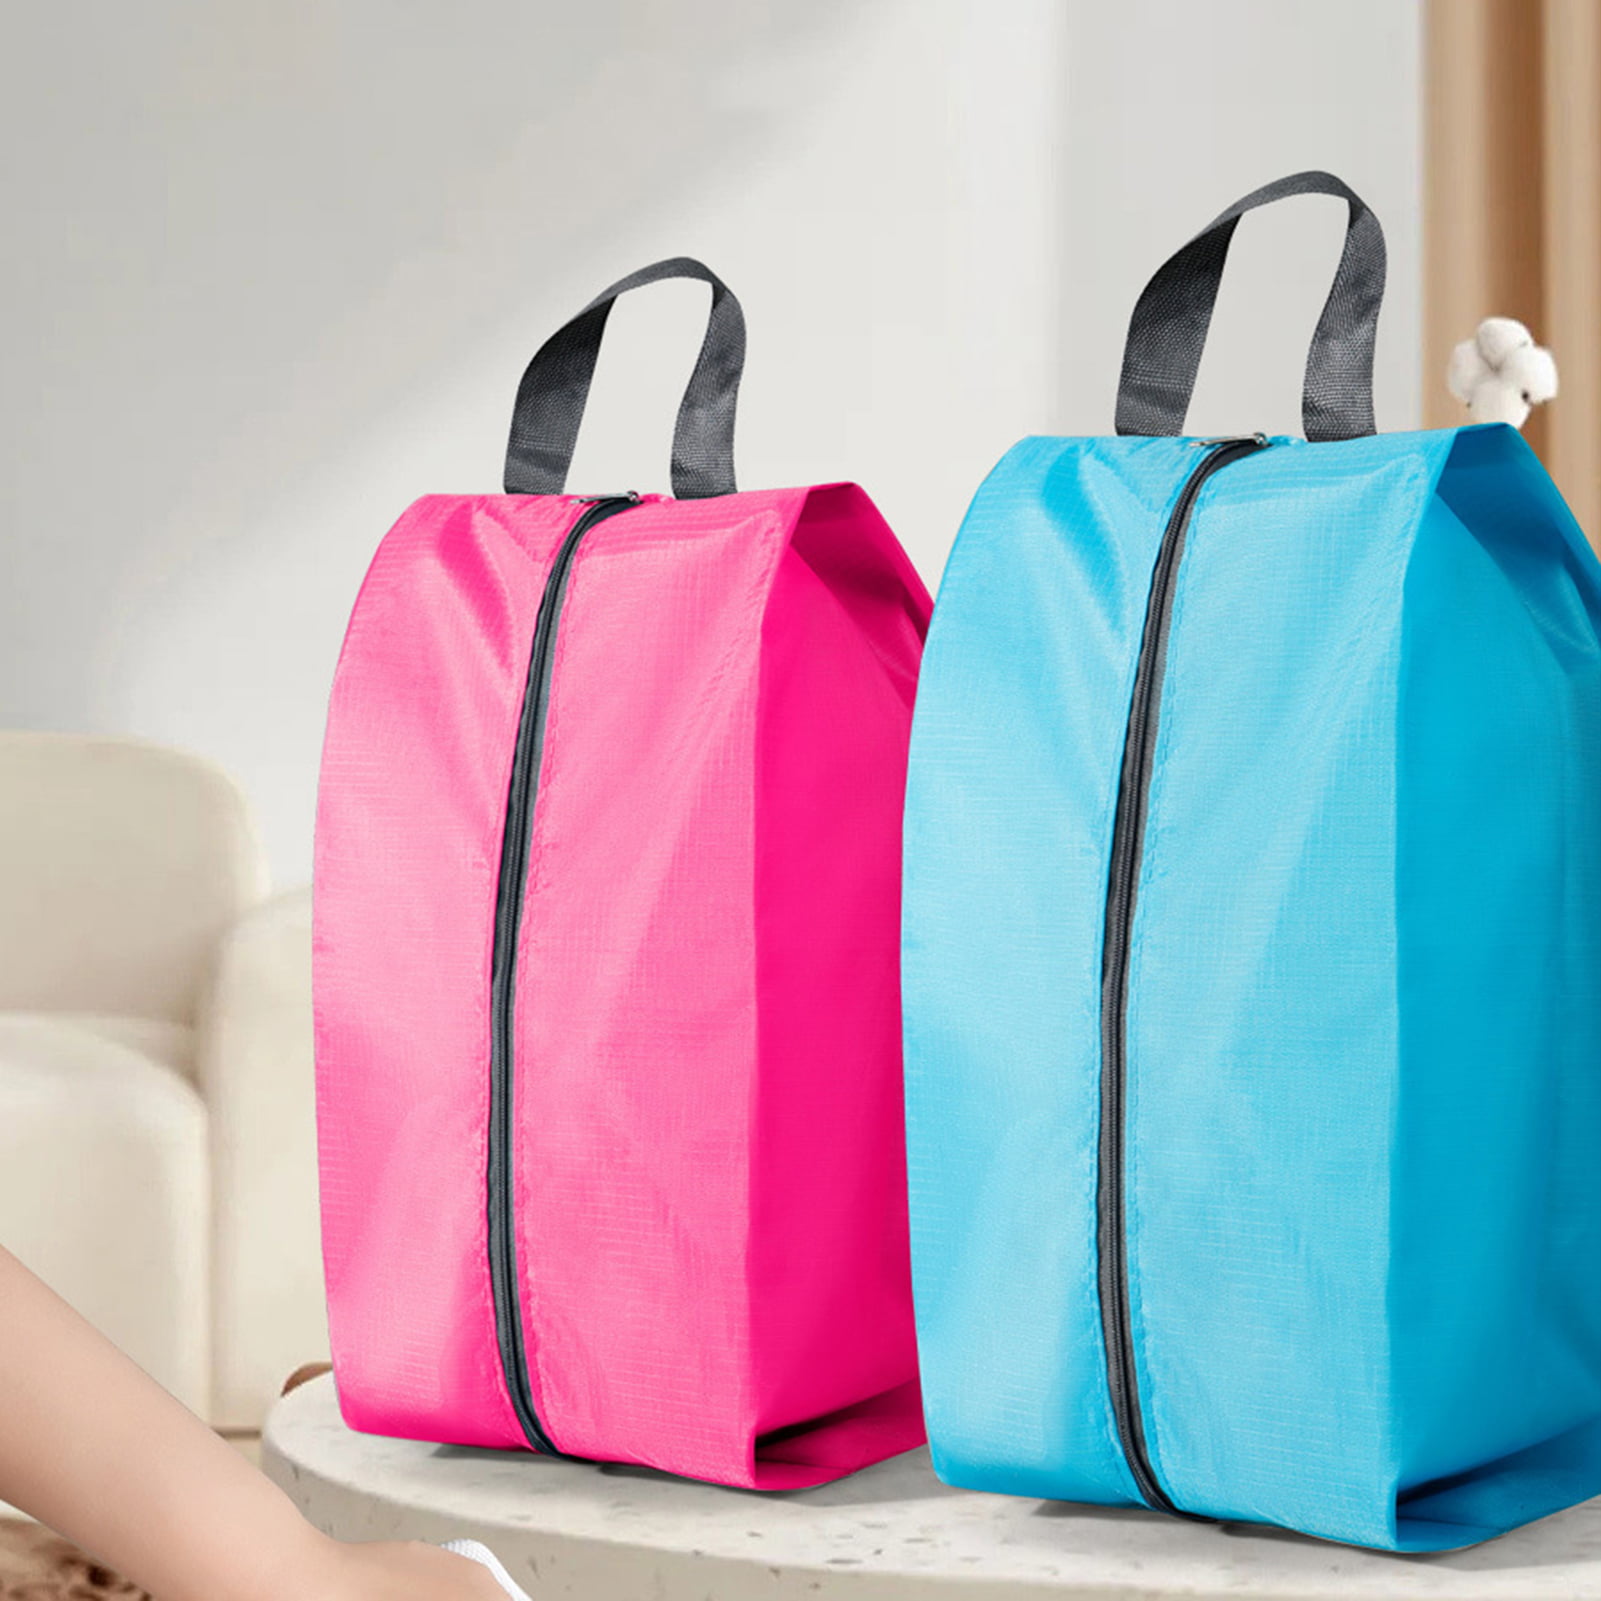 Husfou 20pcs Travel Storage Bags, Waterproof Trip Bags, Zipper